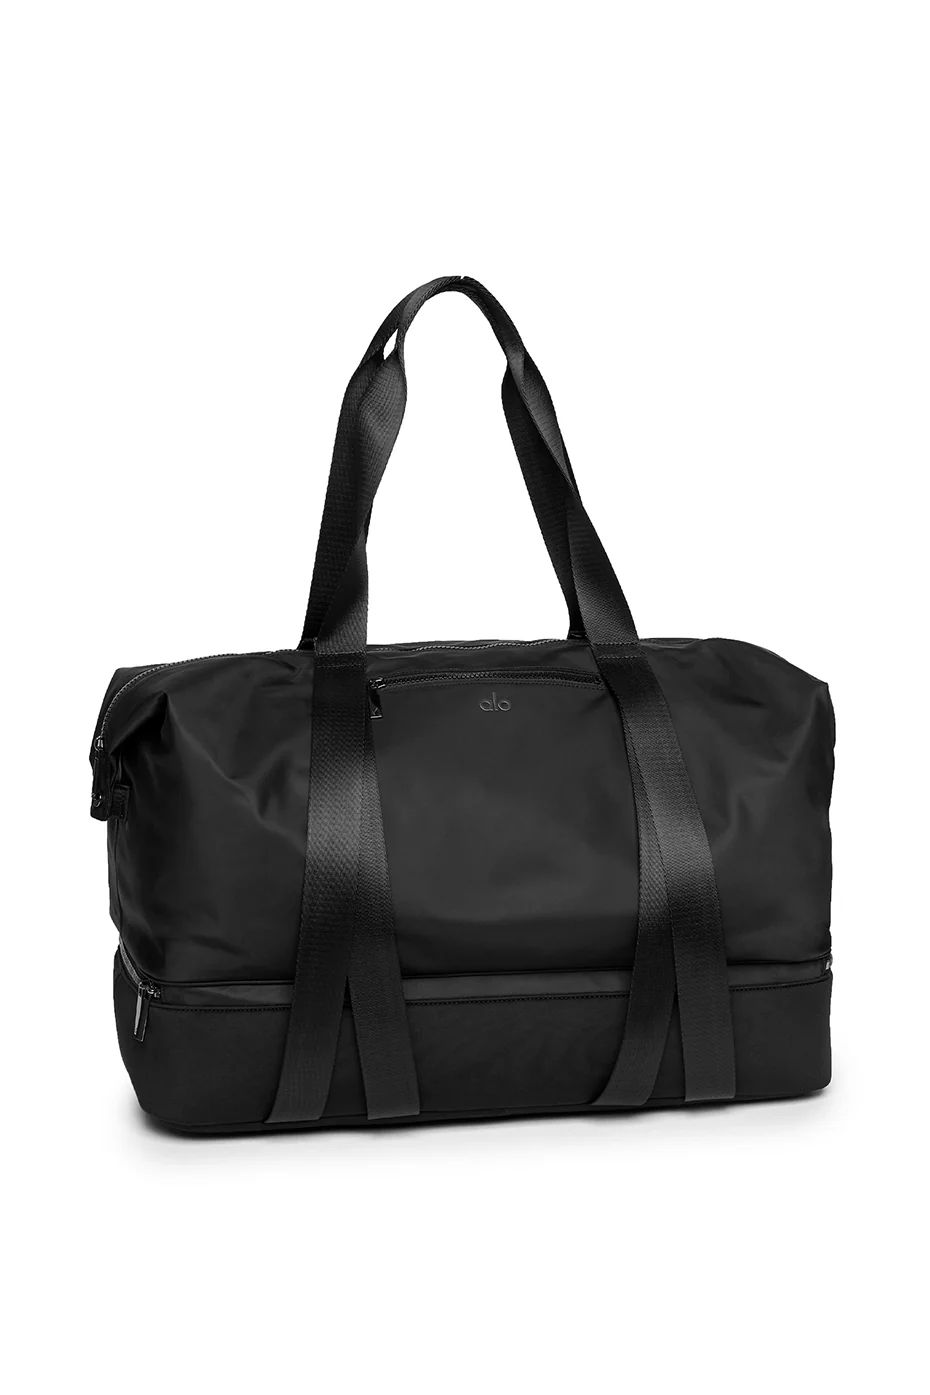 Alo YogaÂ® | City Zen Duffle Bag in Black | Alo Yoga